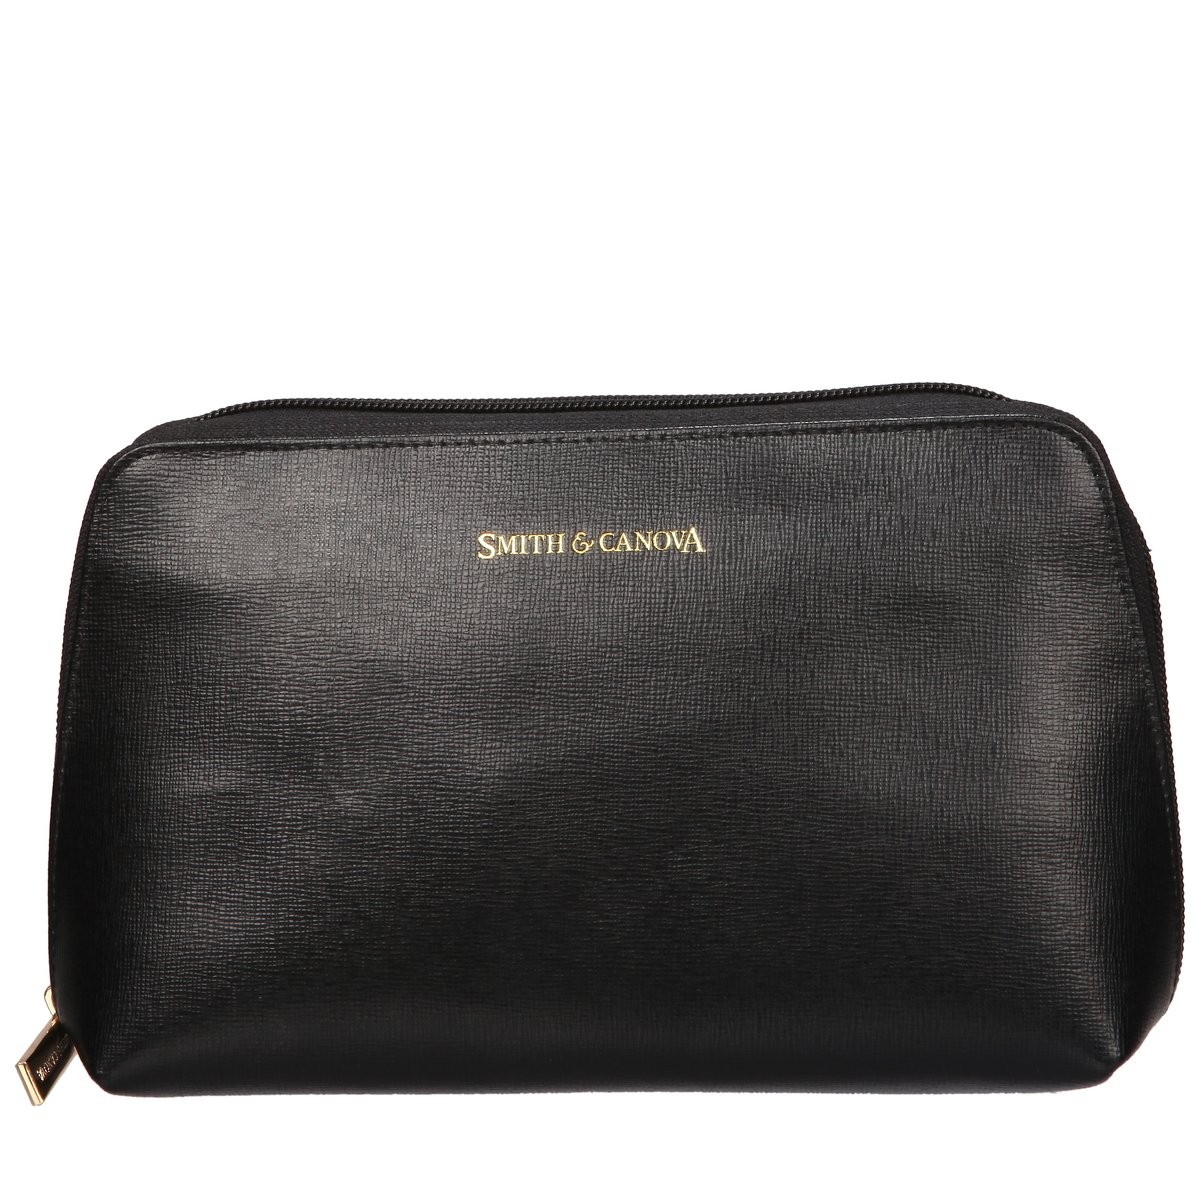 Saffiano Leather Zip Top Cosmetic Bag - Smith & Canova